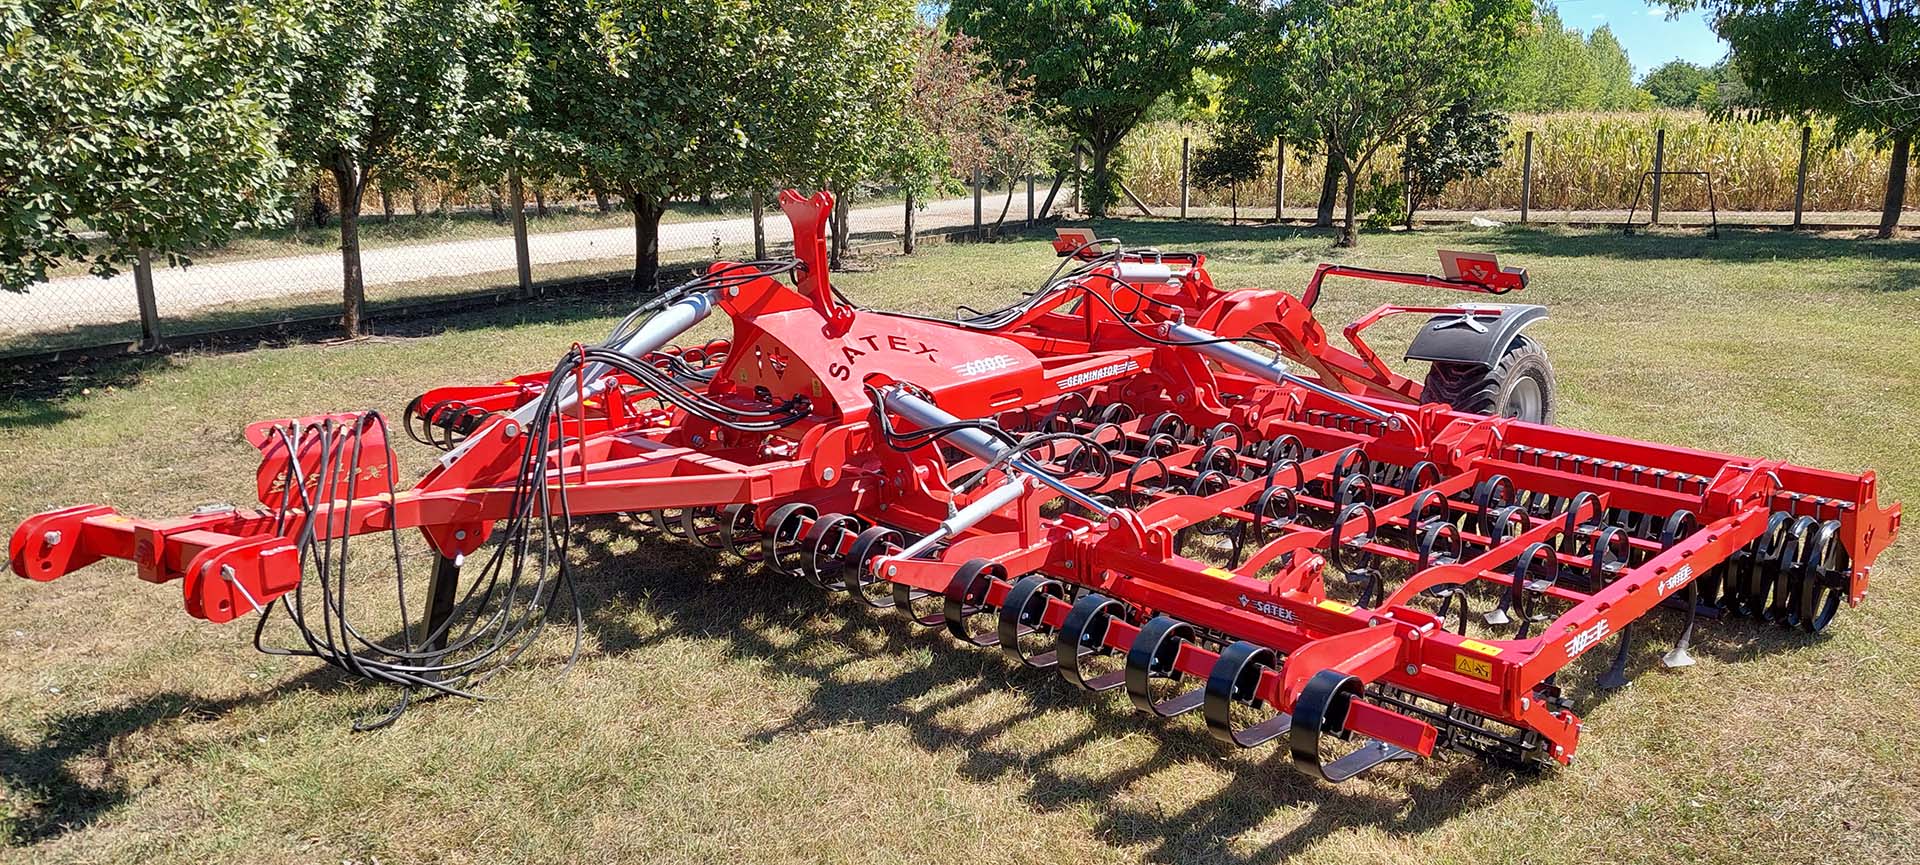 Priključne mašine Germinator SATEX za poljoprivrednike